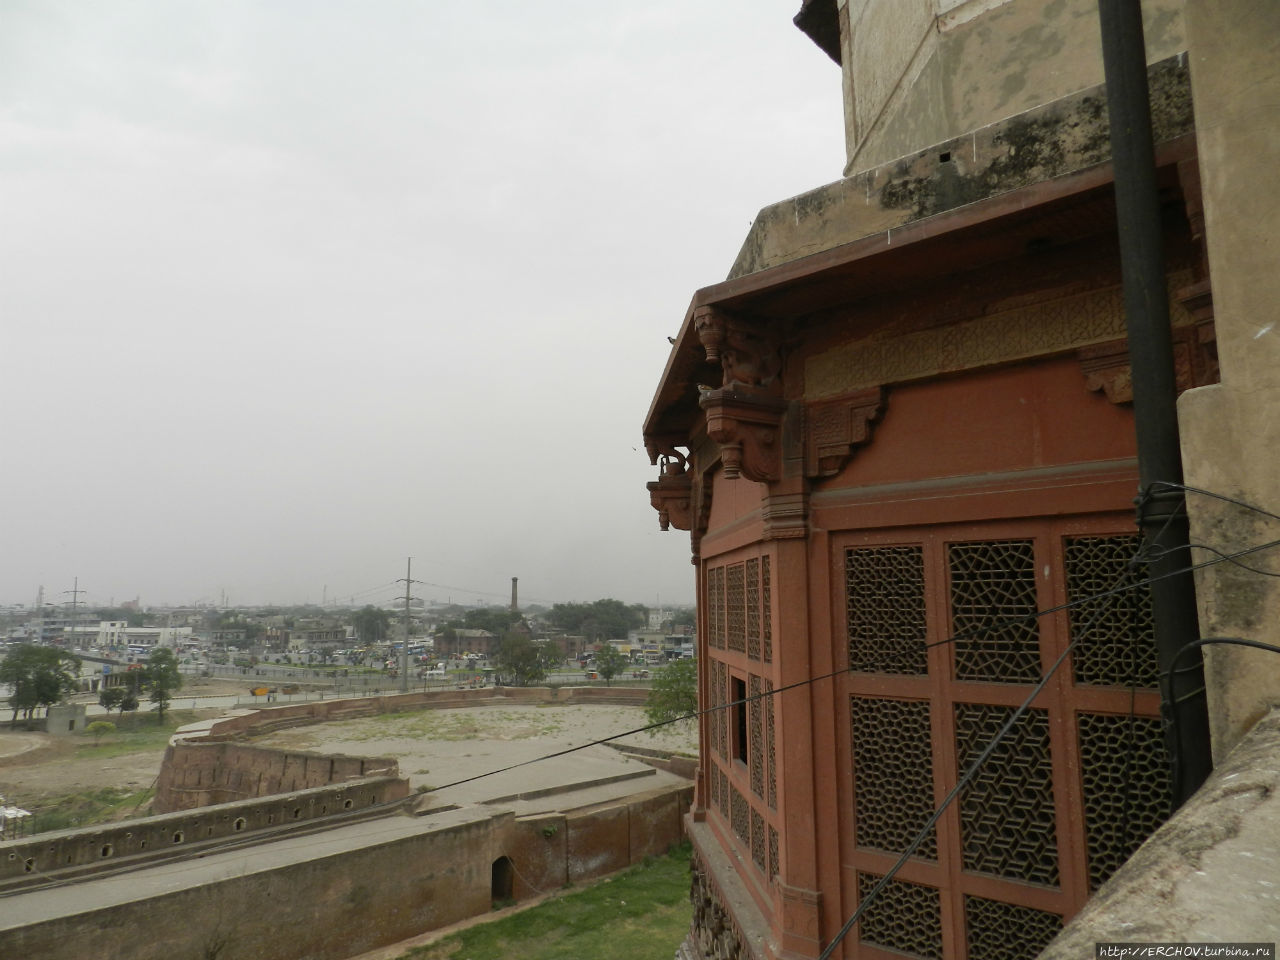 Пакистан. Ч — 4. Лахорский форт Лахор, Пакистан